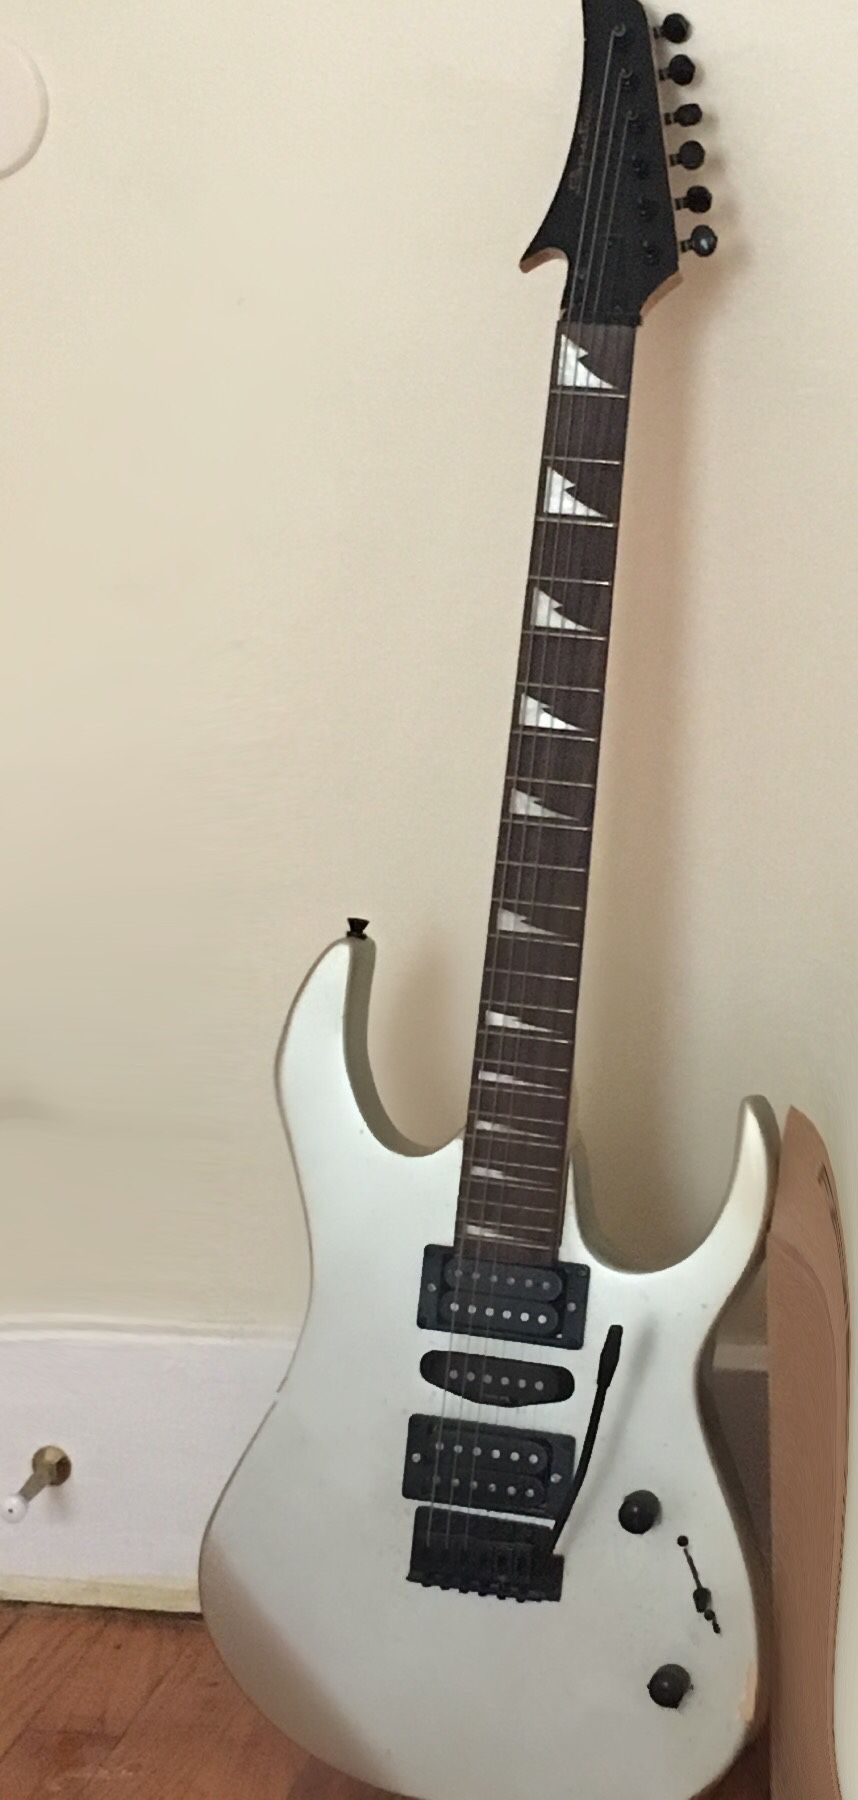 Silver Shark electric guitar